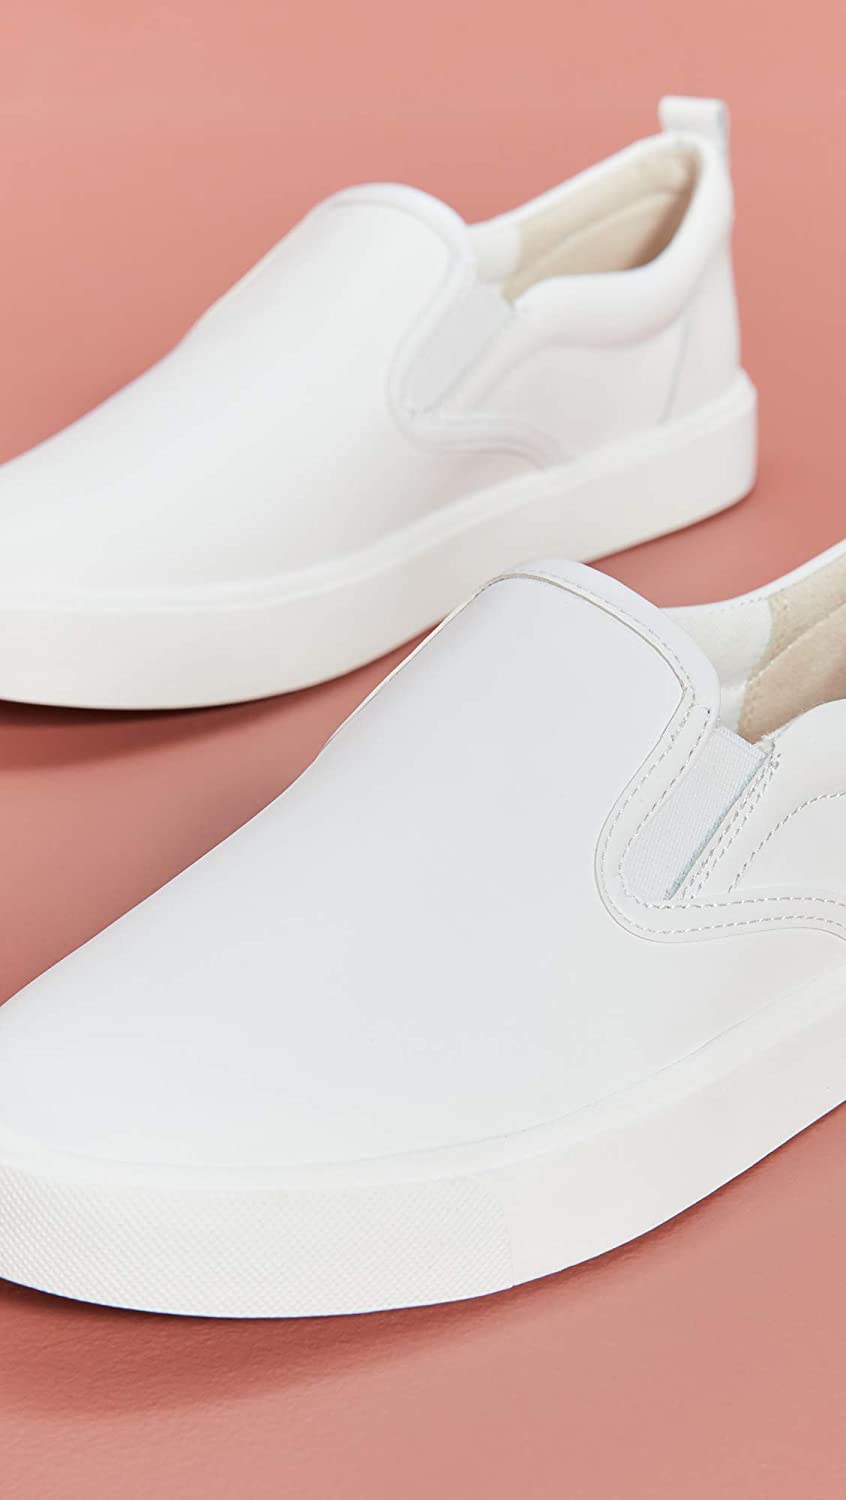 Sam Edelman Women's Edna Sneaker, White, Size 7.5 eCOT | eBay